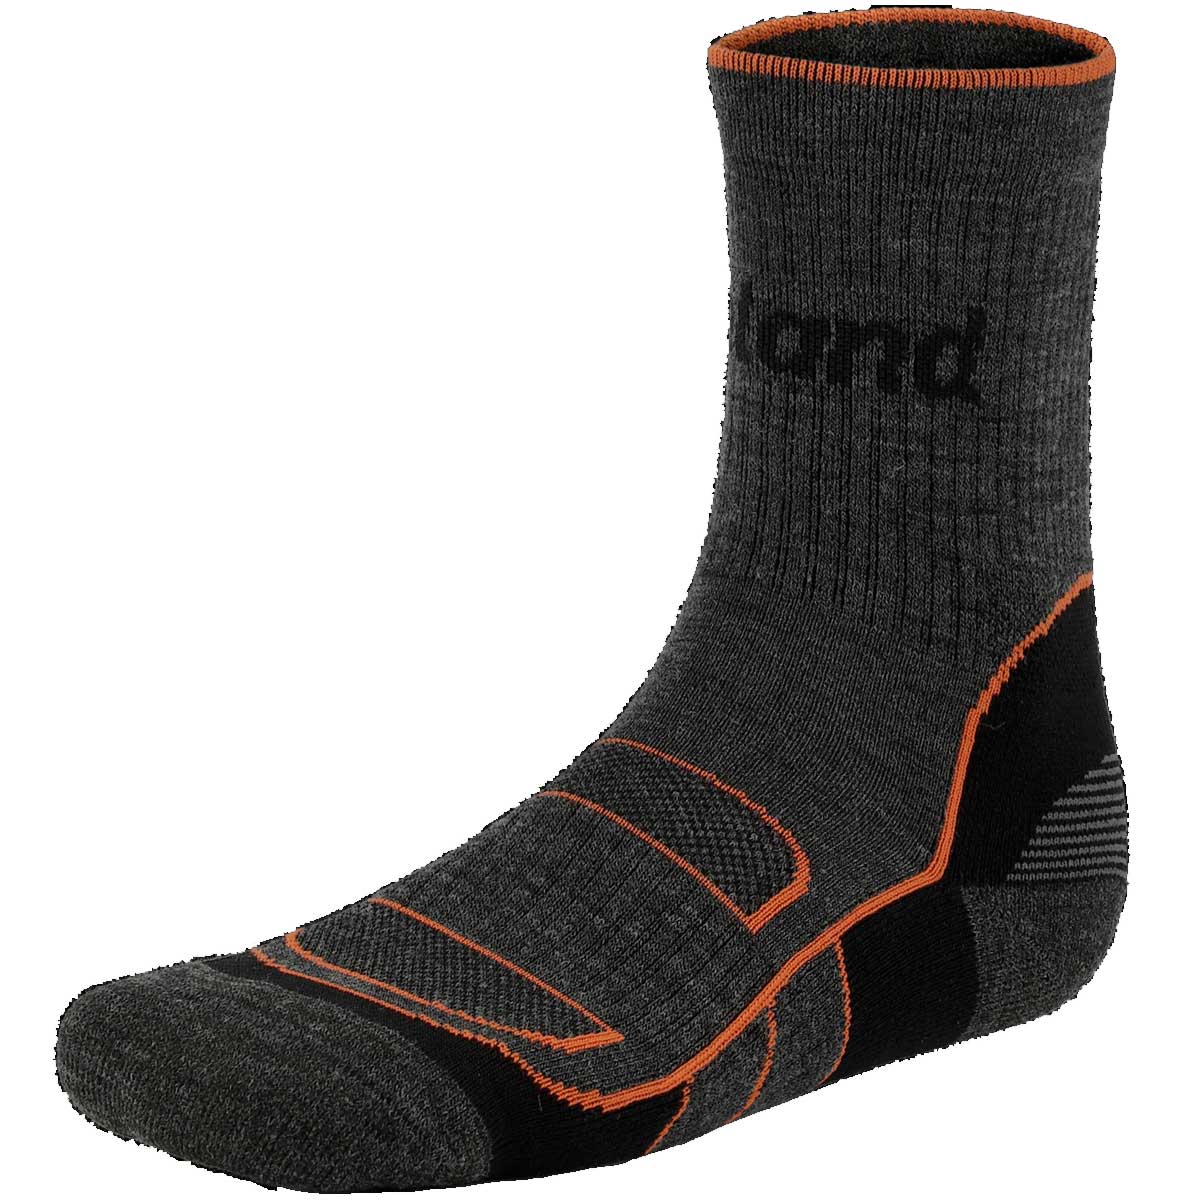 SEELAND Forest Socks - Grey & Black